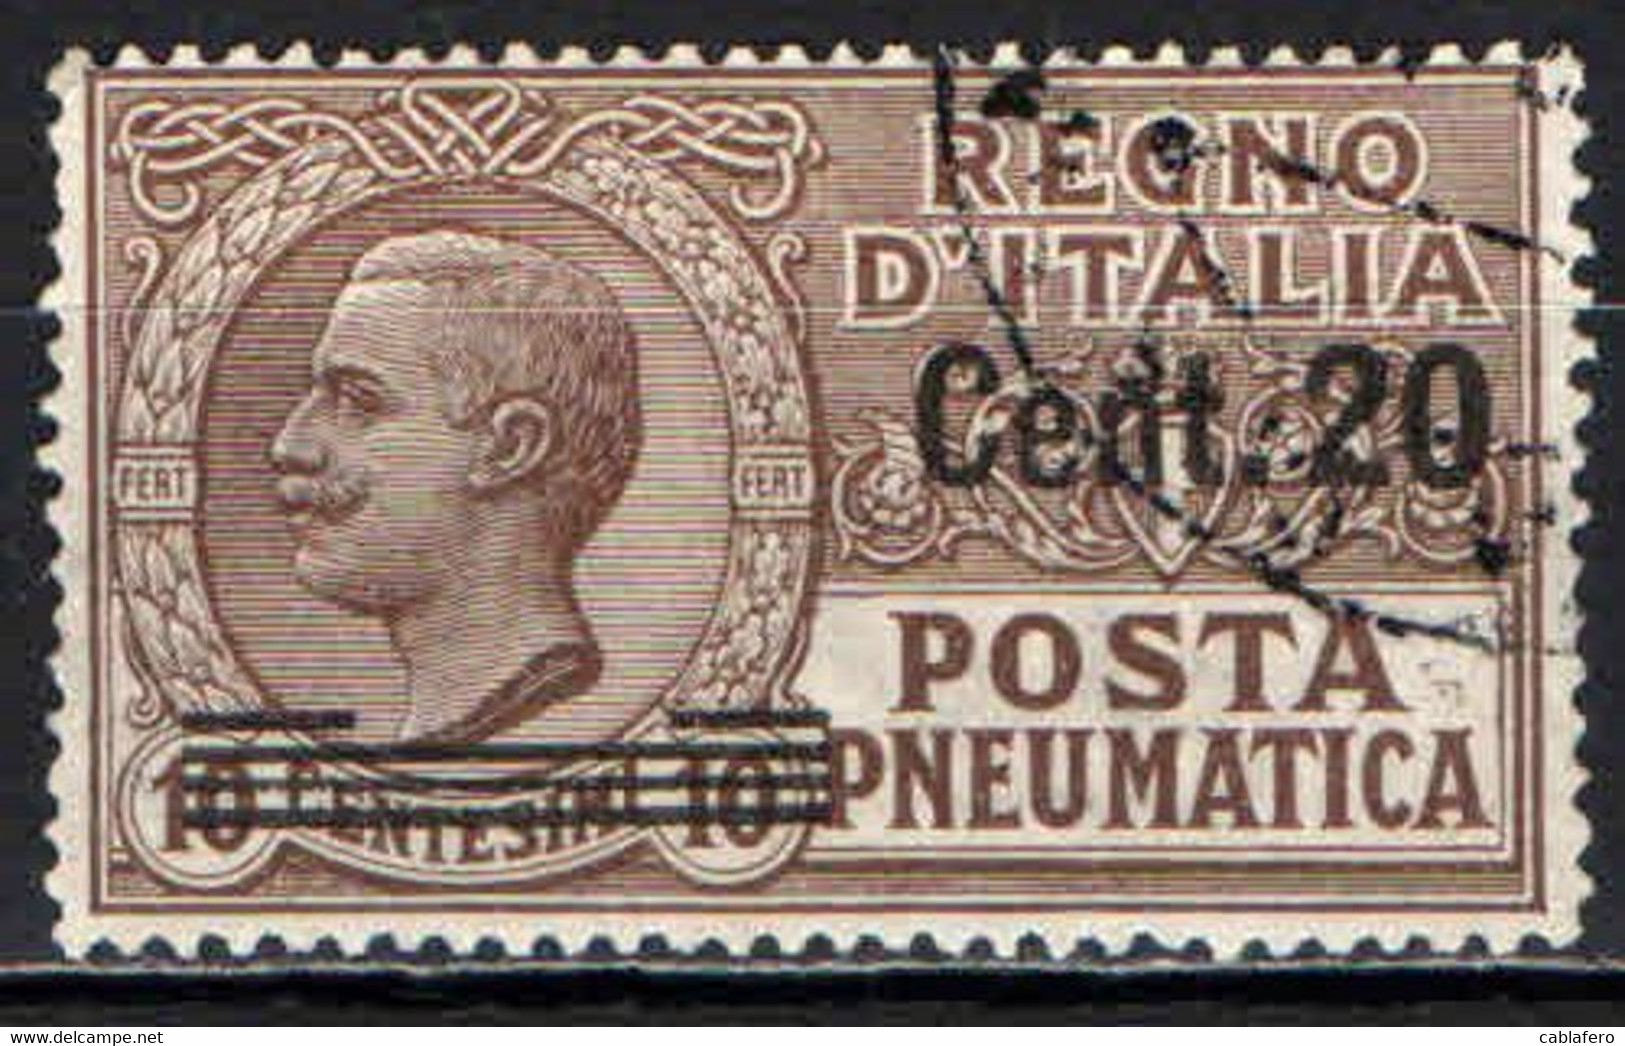 ITALIA REGNO - 1925 - POSTA PNEUMATICA - EFFIGIE DEL RE VITTORIO EMANUELE III - SOVRASTAMPATO 20 CENT SU 10 - USATO - Pneumatic Mail